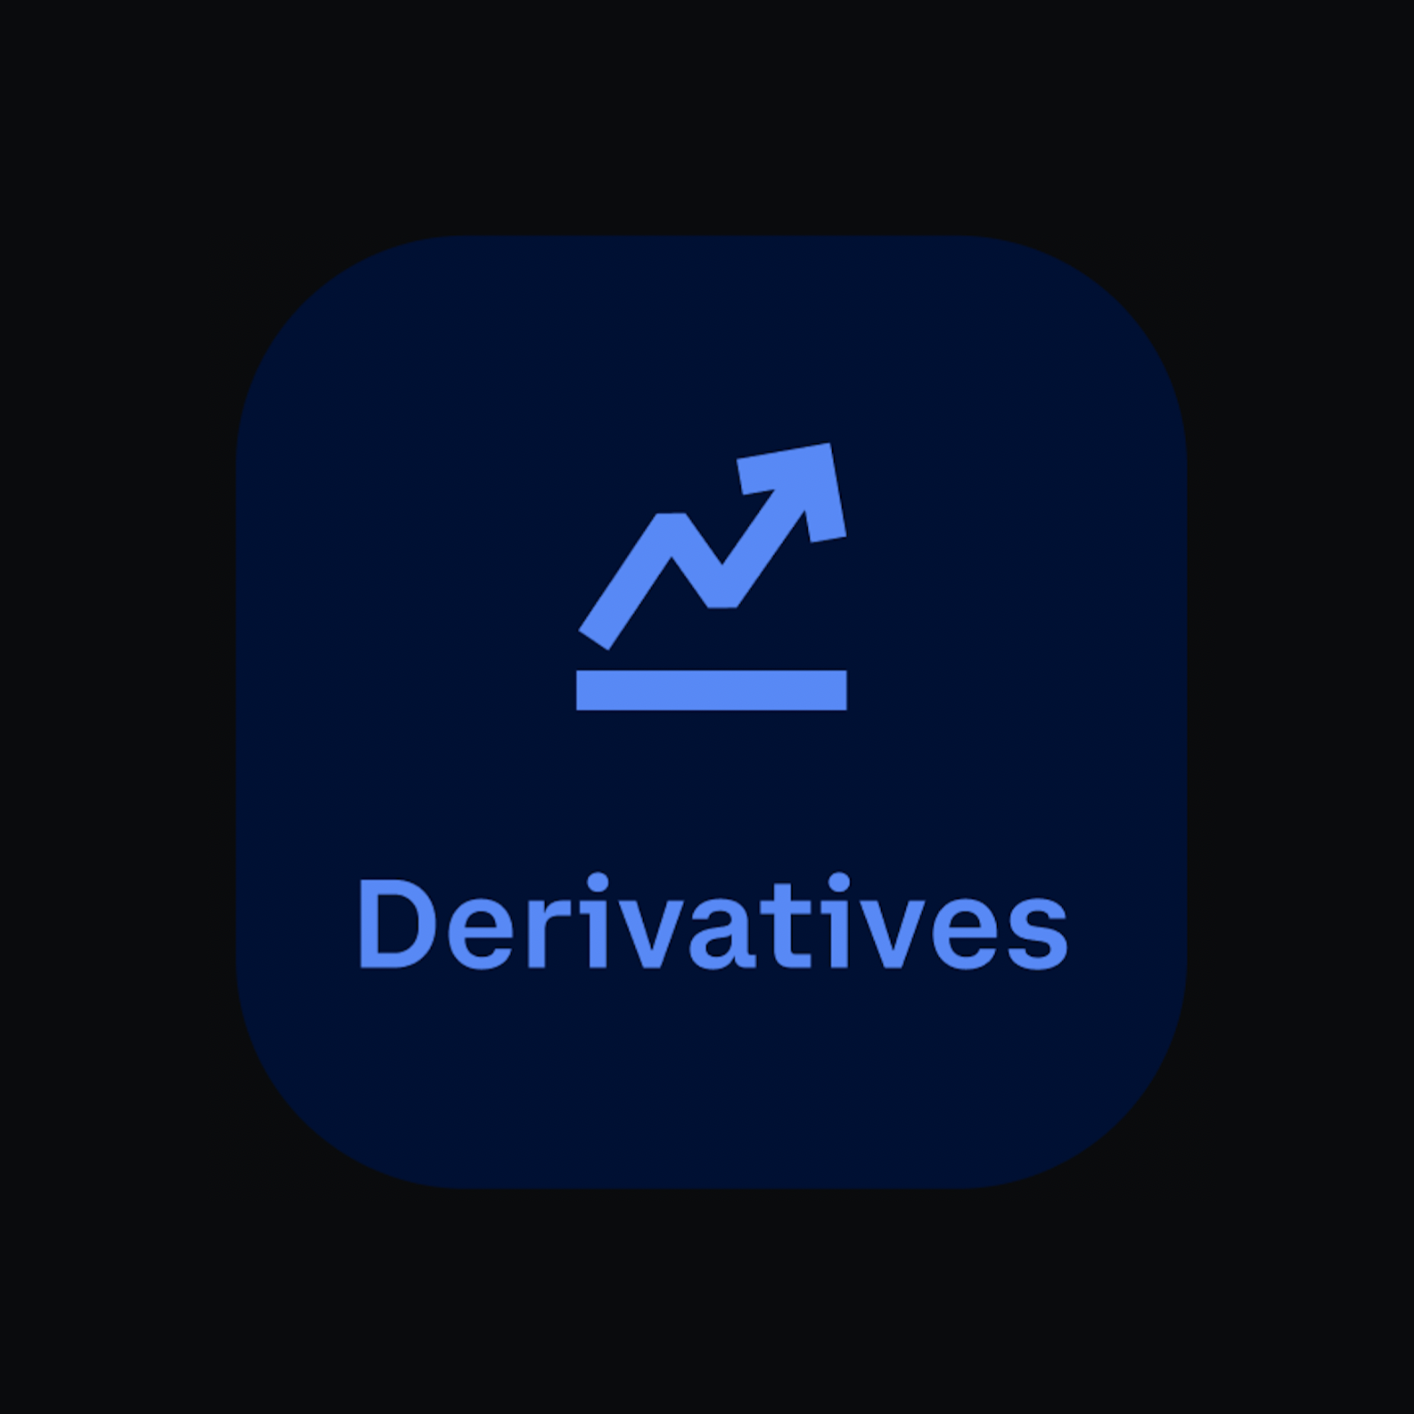 derivatives_image_txt.png